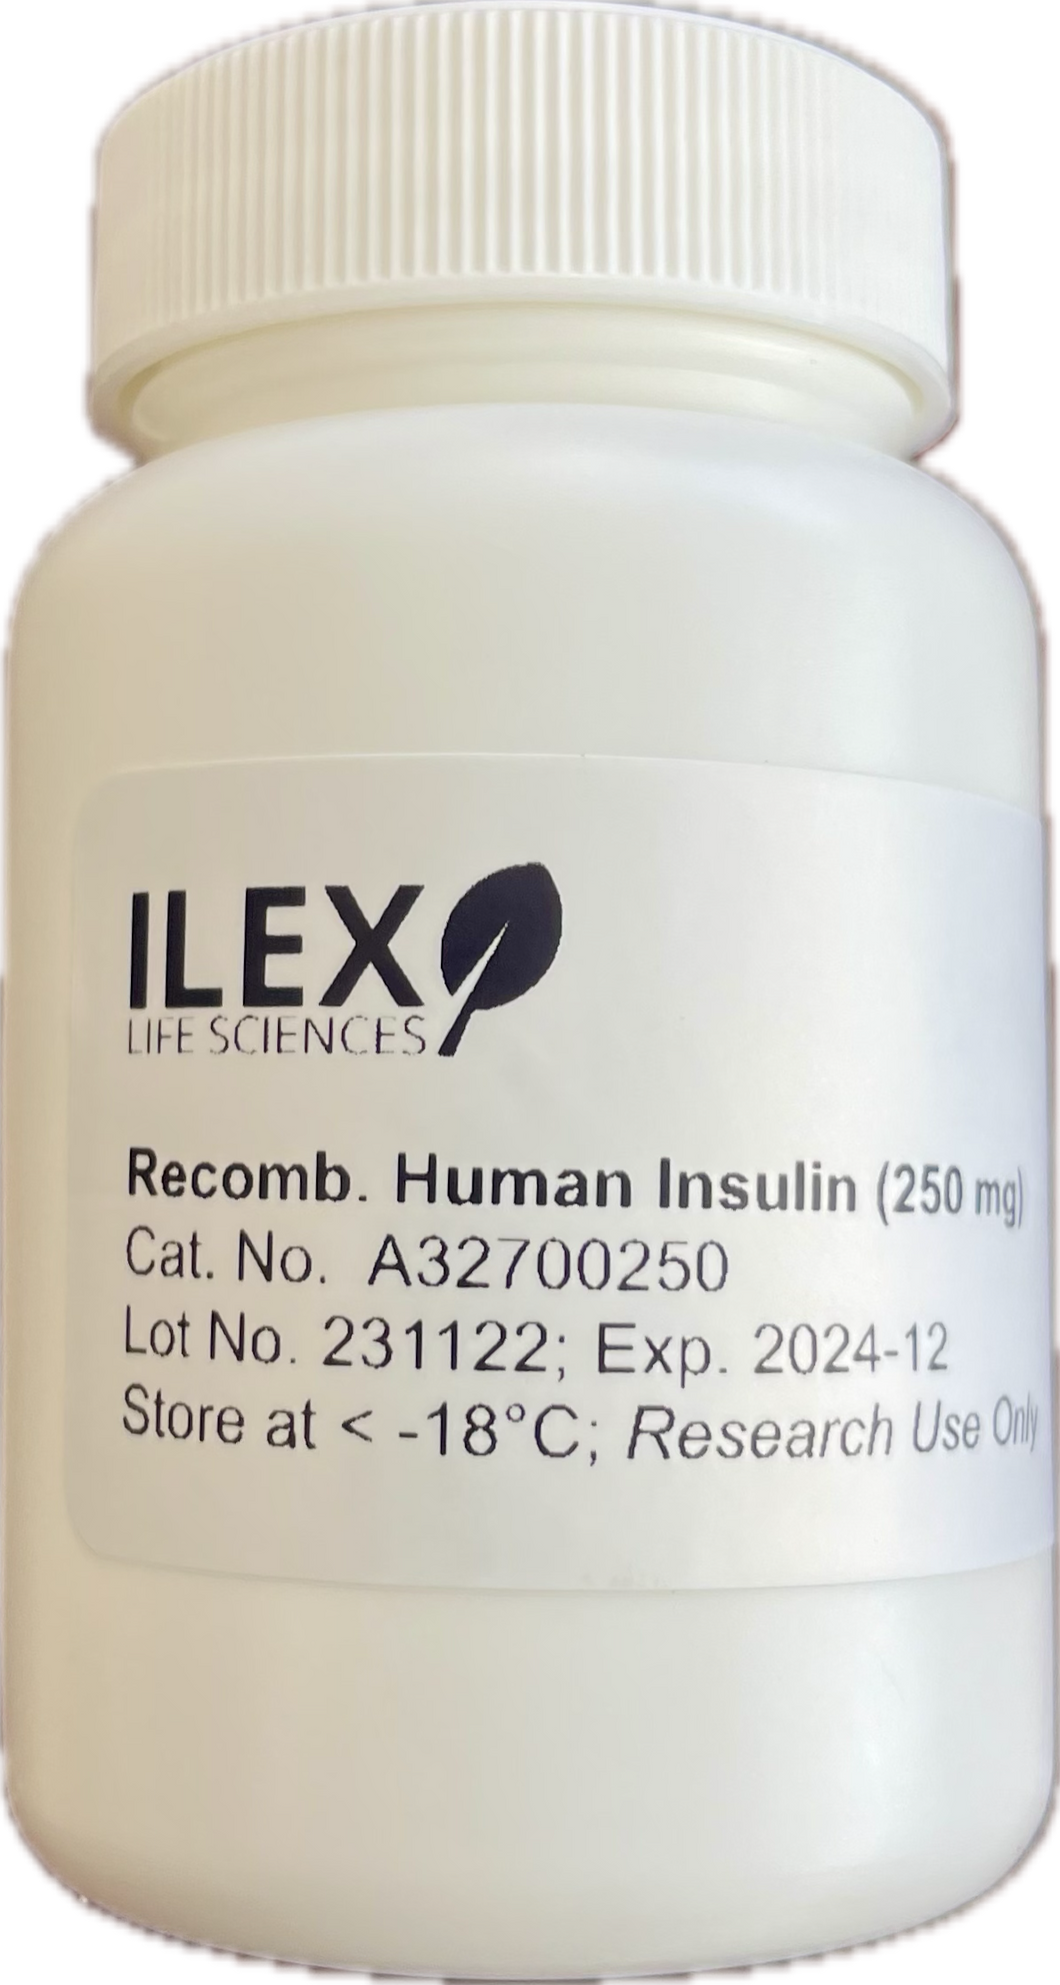 Ilex Life Sciences Recombinant Human Insulin Protein